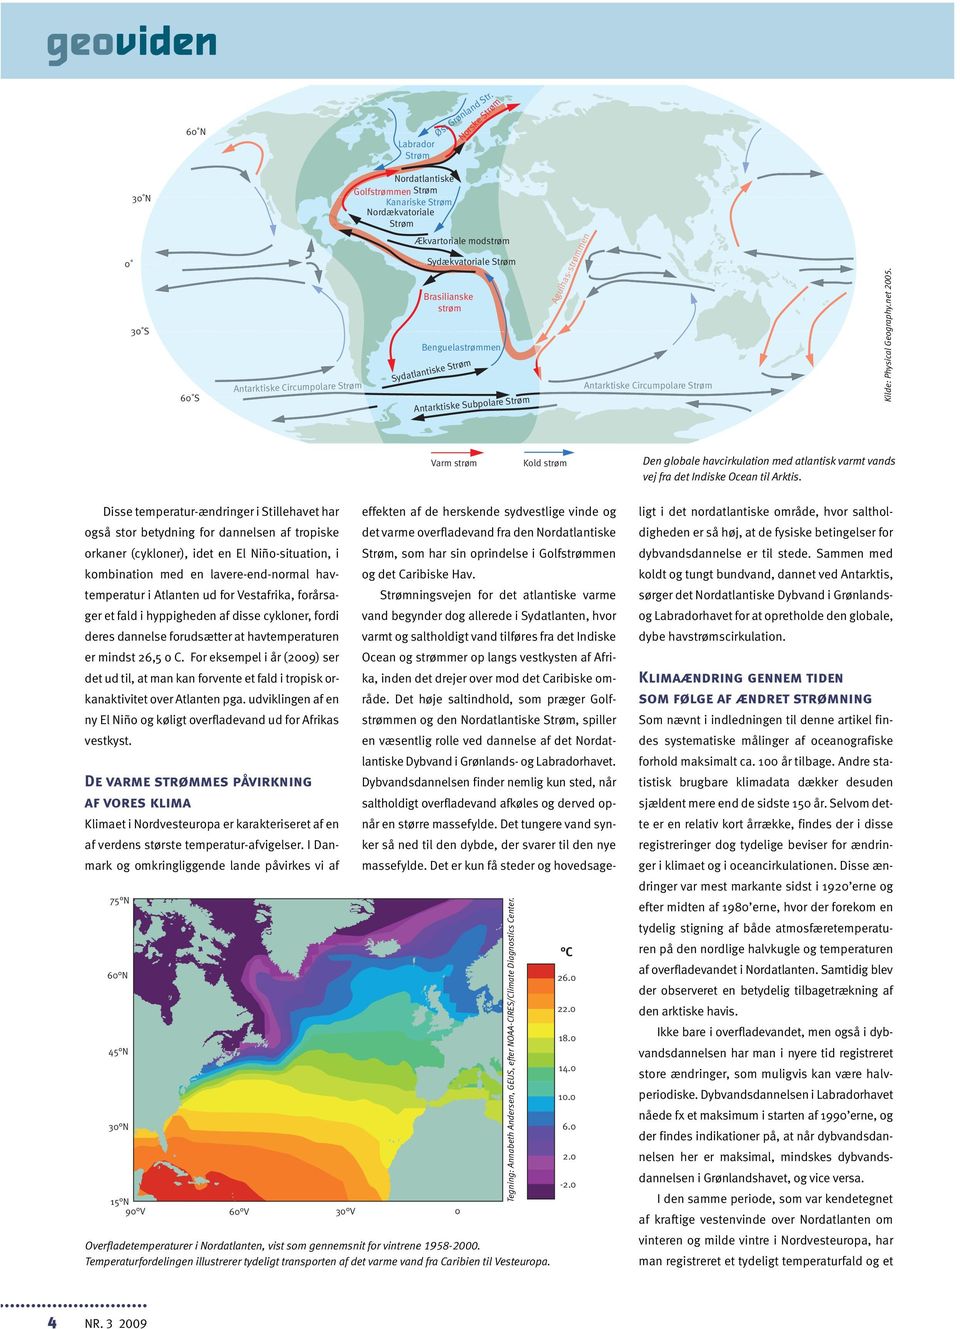 Benguelastrømmen Sydatlantiske Strøm Antarktiske Subpolare Strøm Aguihas-strømmen Antarktiske Circumpolare Strøm Kilde: Physical Geography.net 2005.